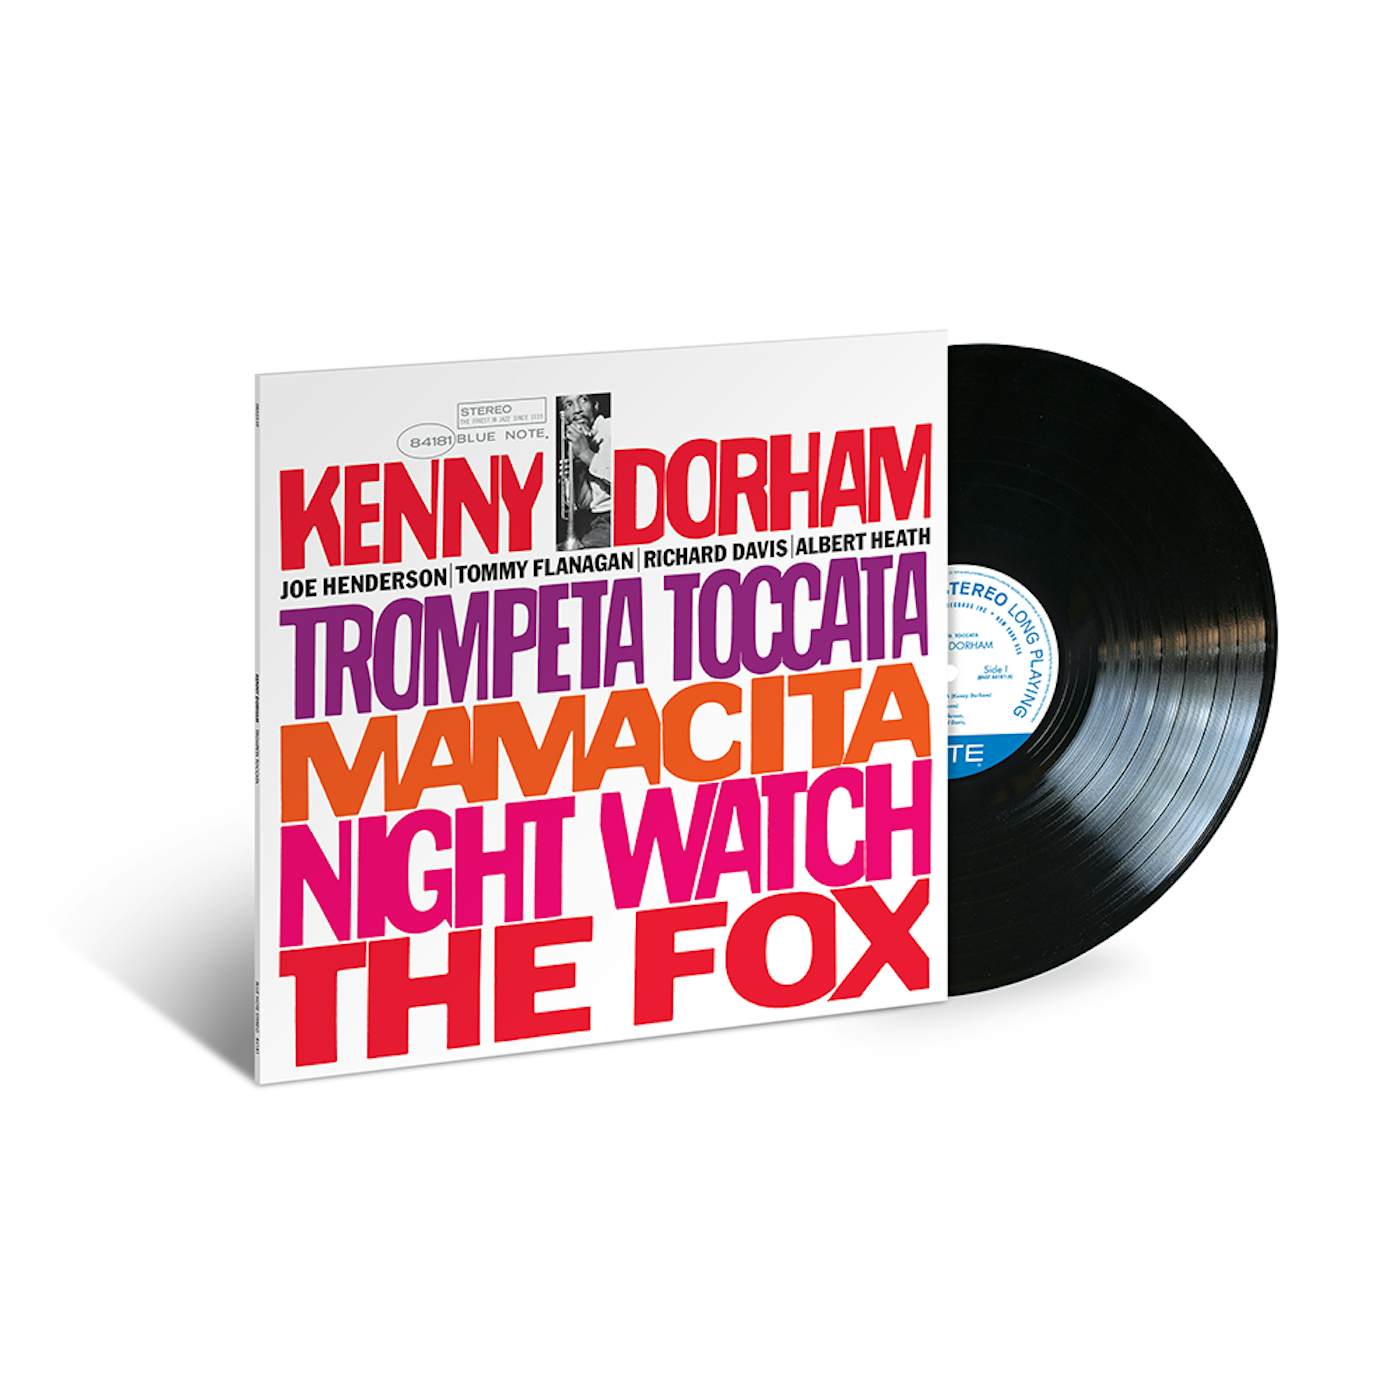 Kenny Dorham Trompeta Toccata LP (Vinyl)